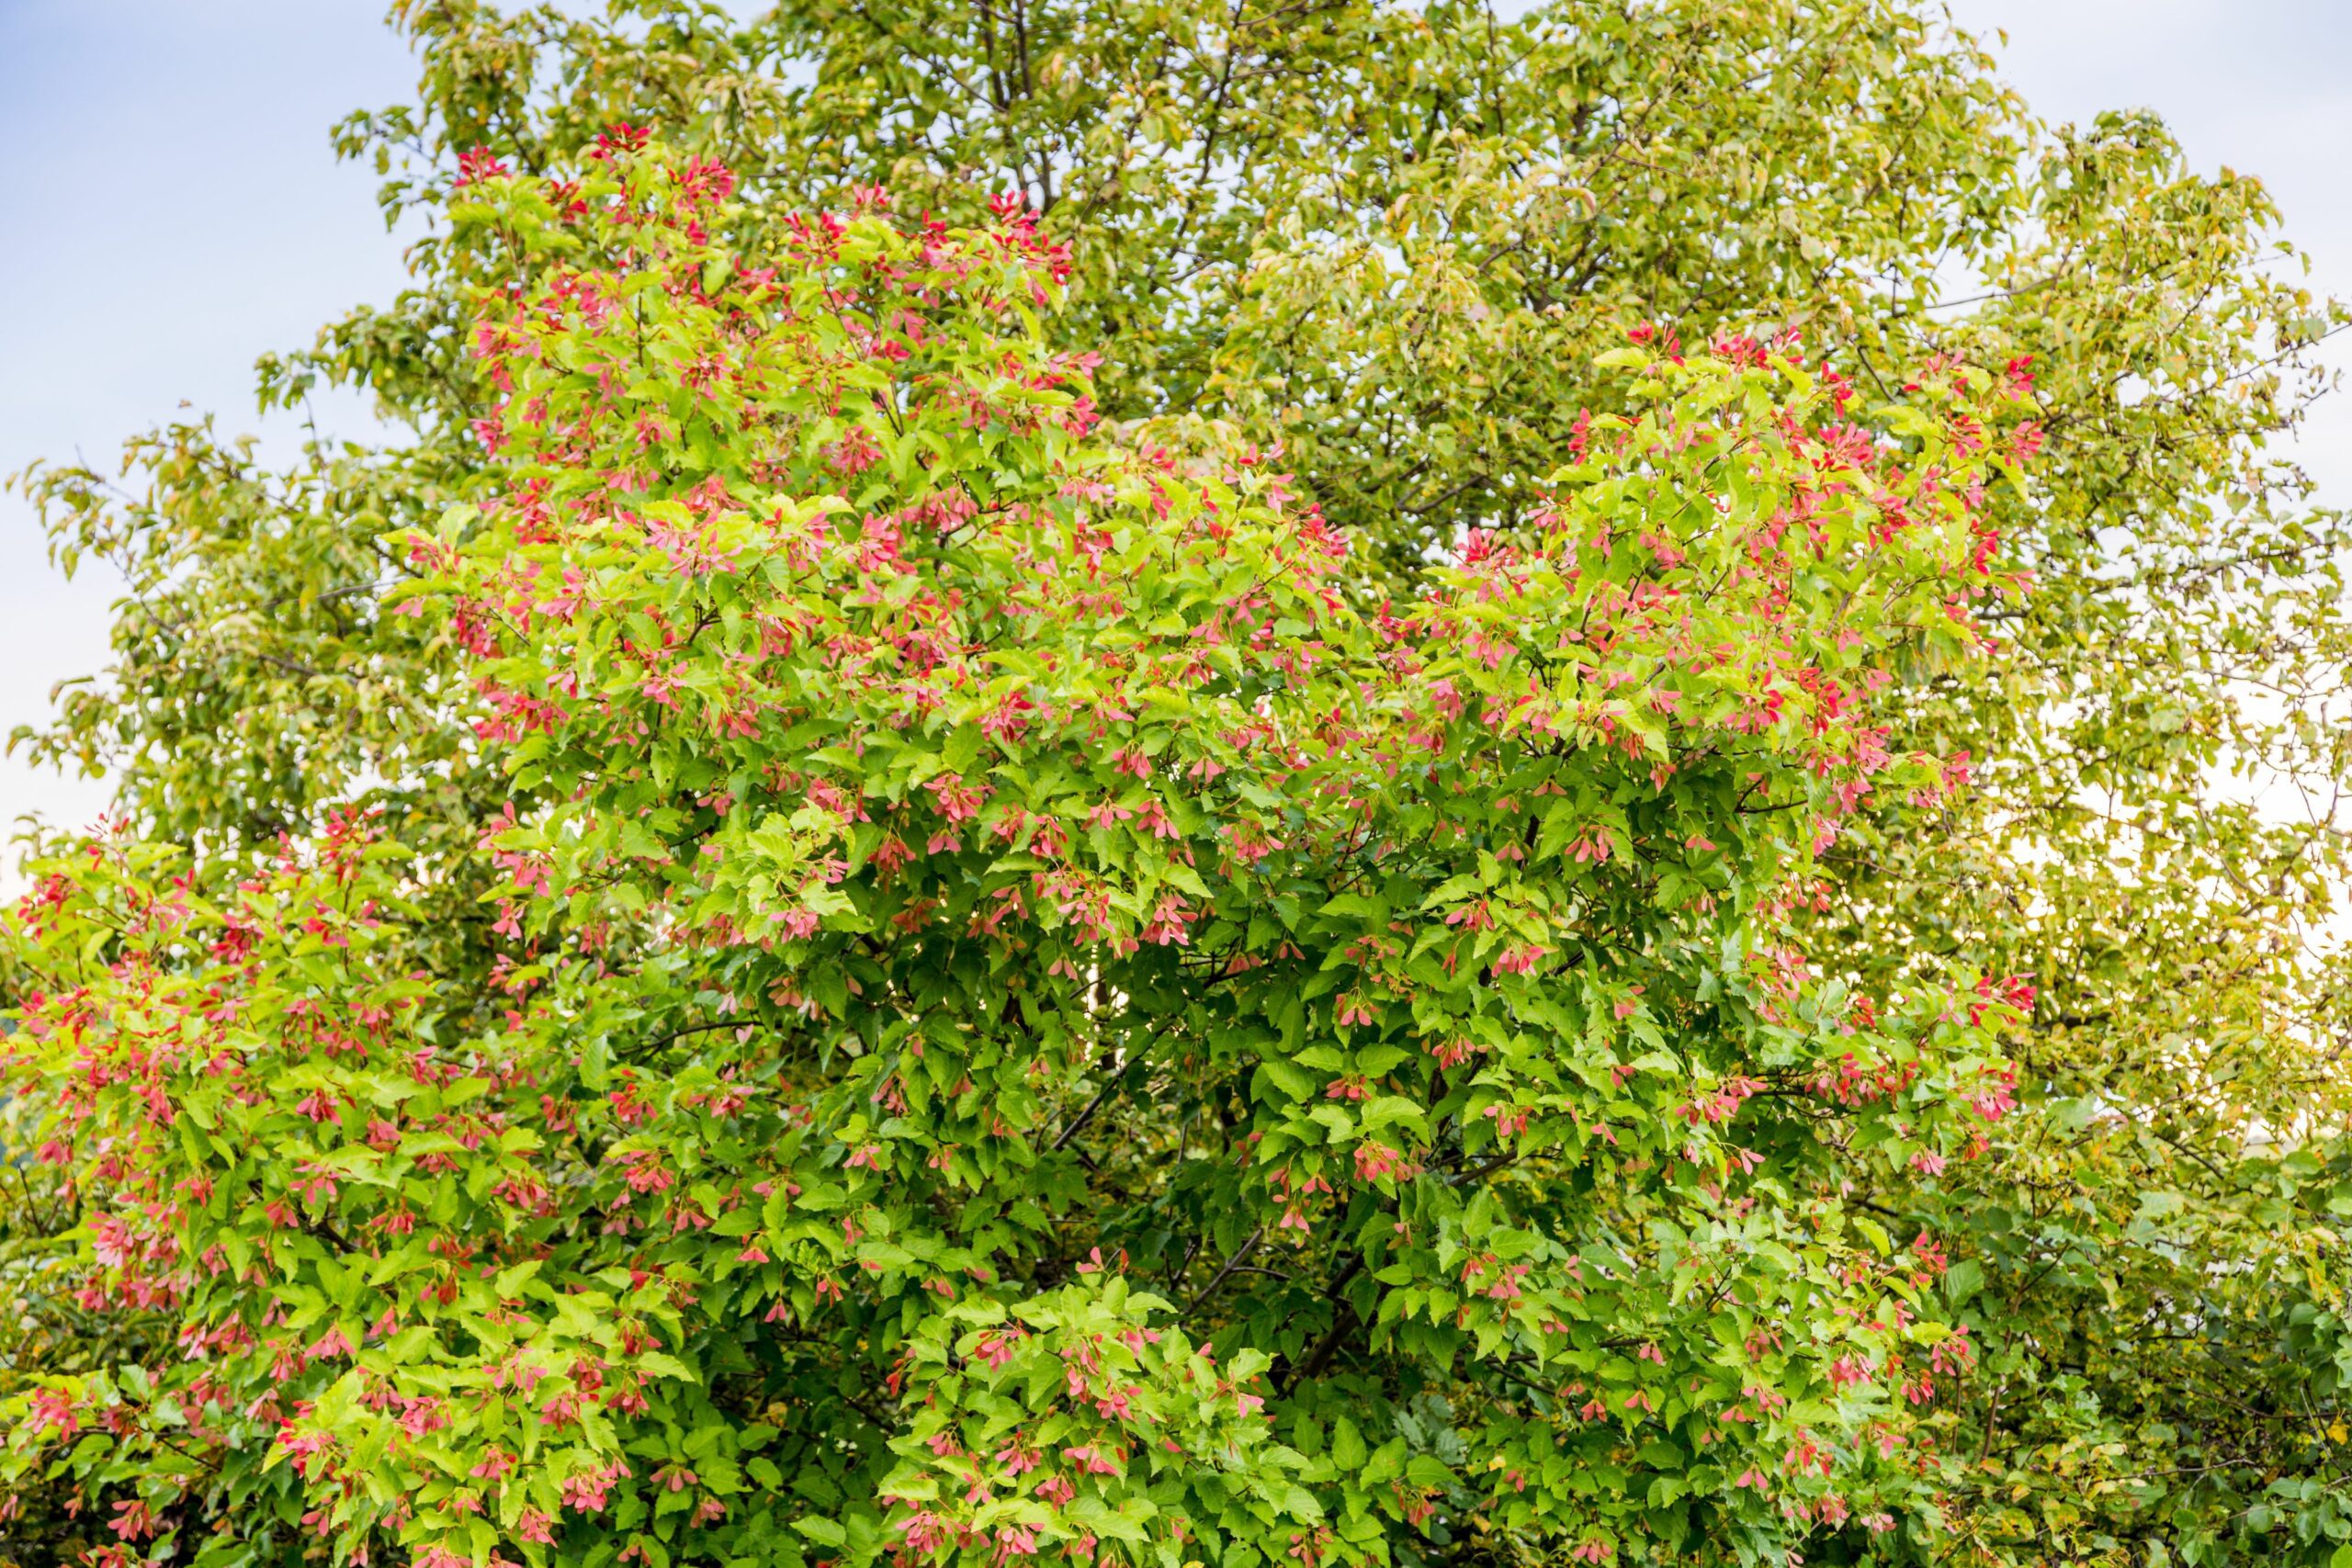 Acer tararicum ginnala foliage and winged keys